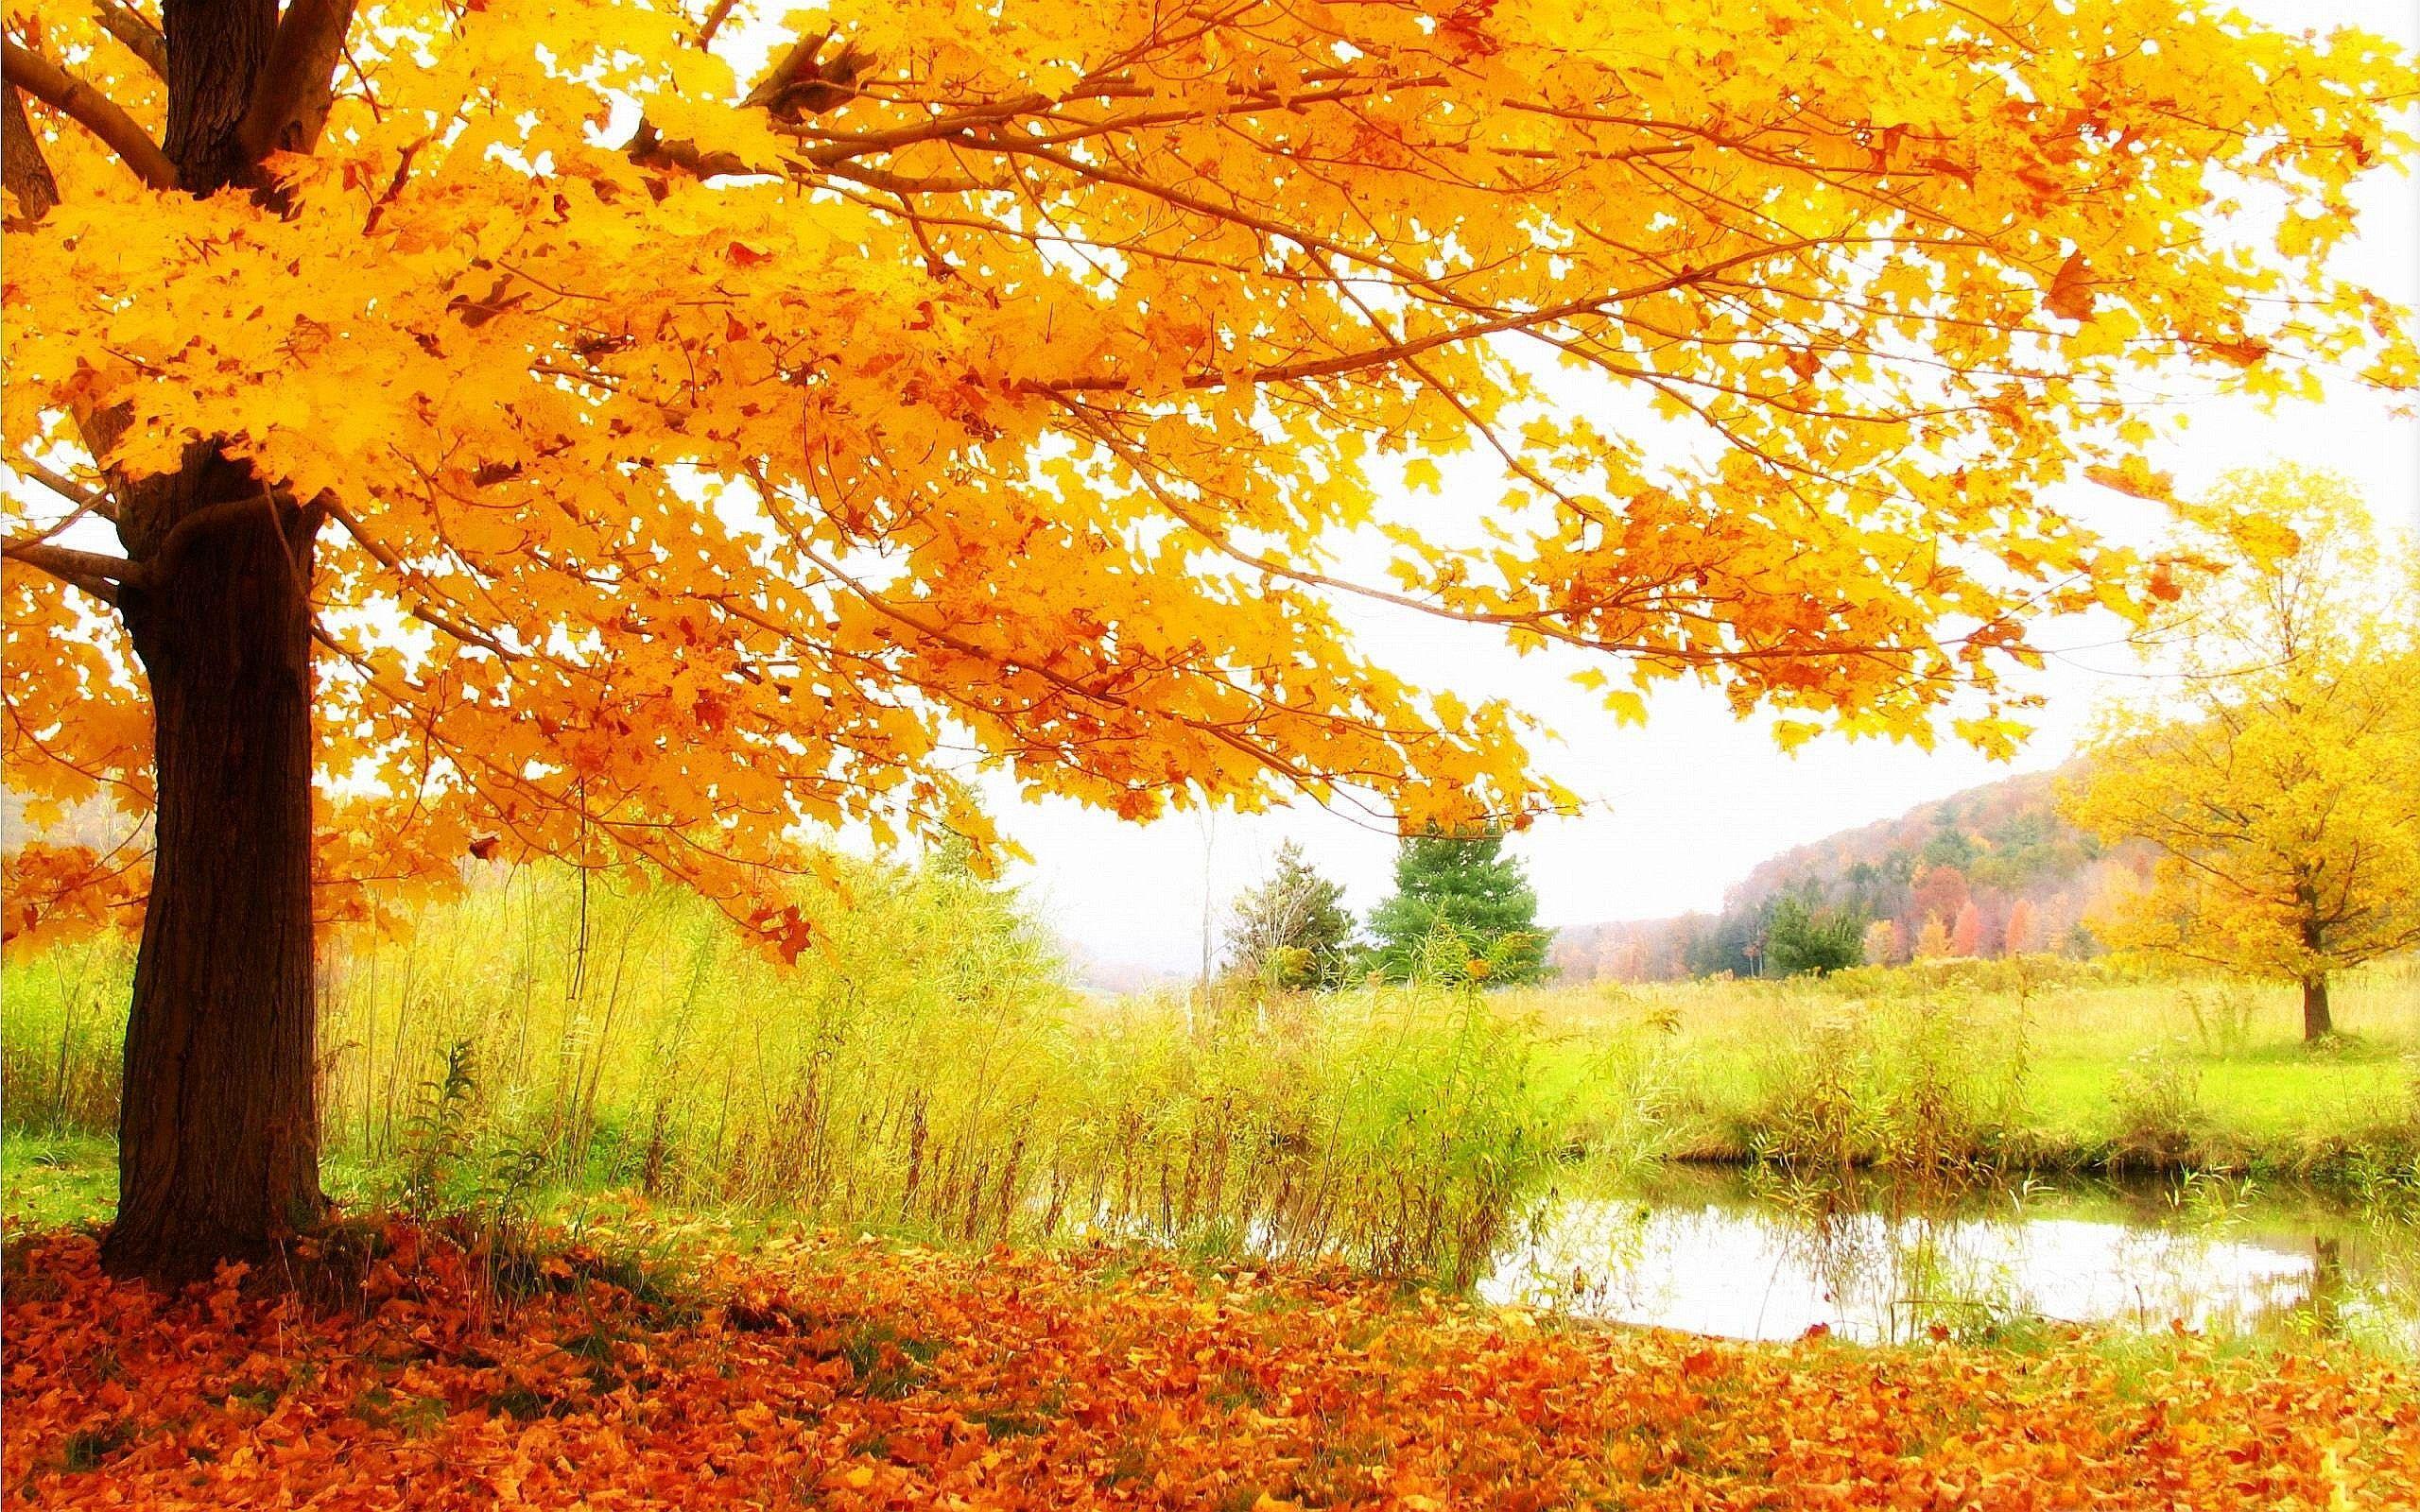 beautiful fall colors. Autumn scenery, Scenery wallpaper, Scenery